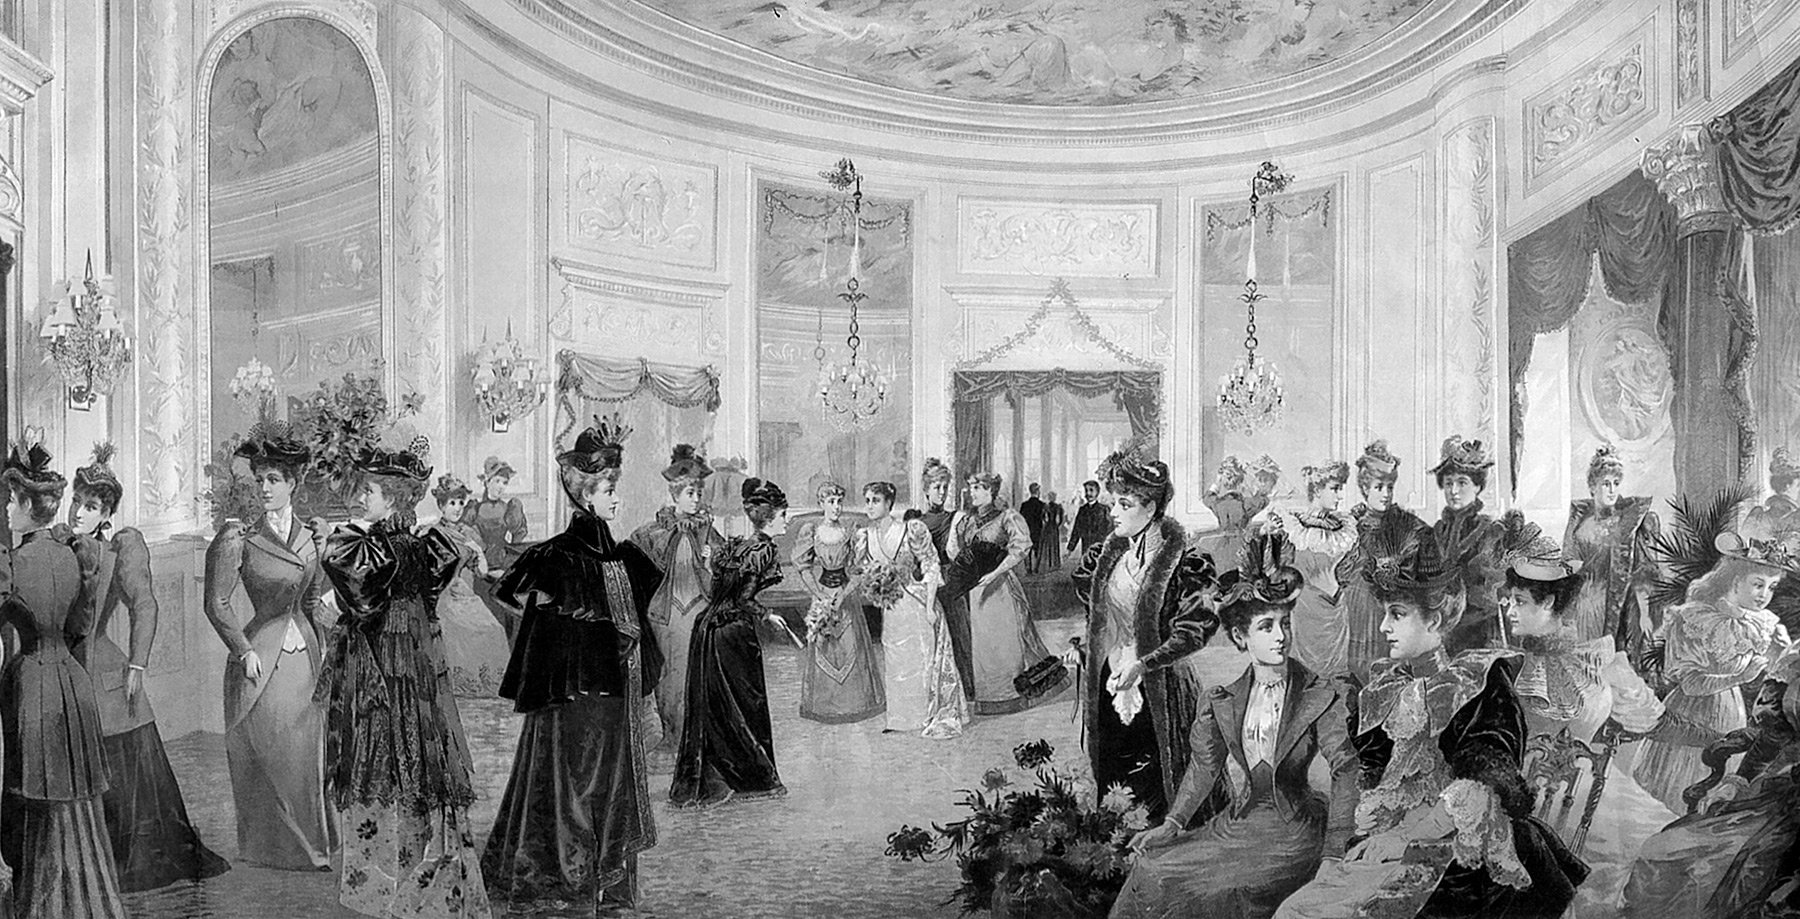 1893 Sketch of Elegant Women in the Waldorf Hotel Octagon Room